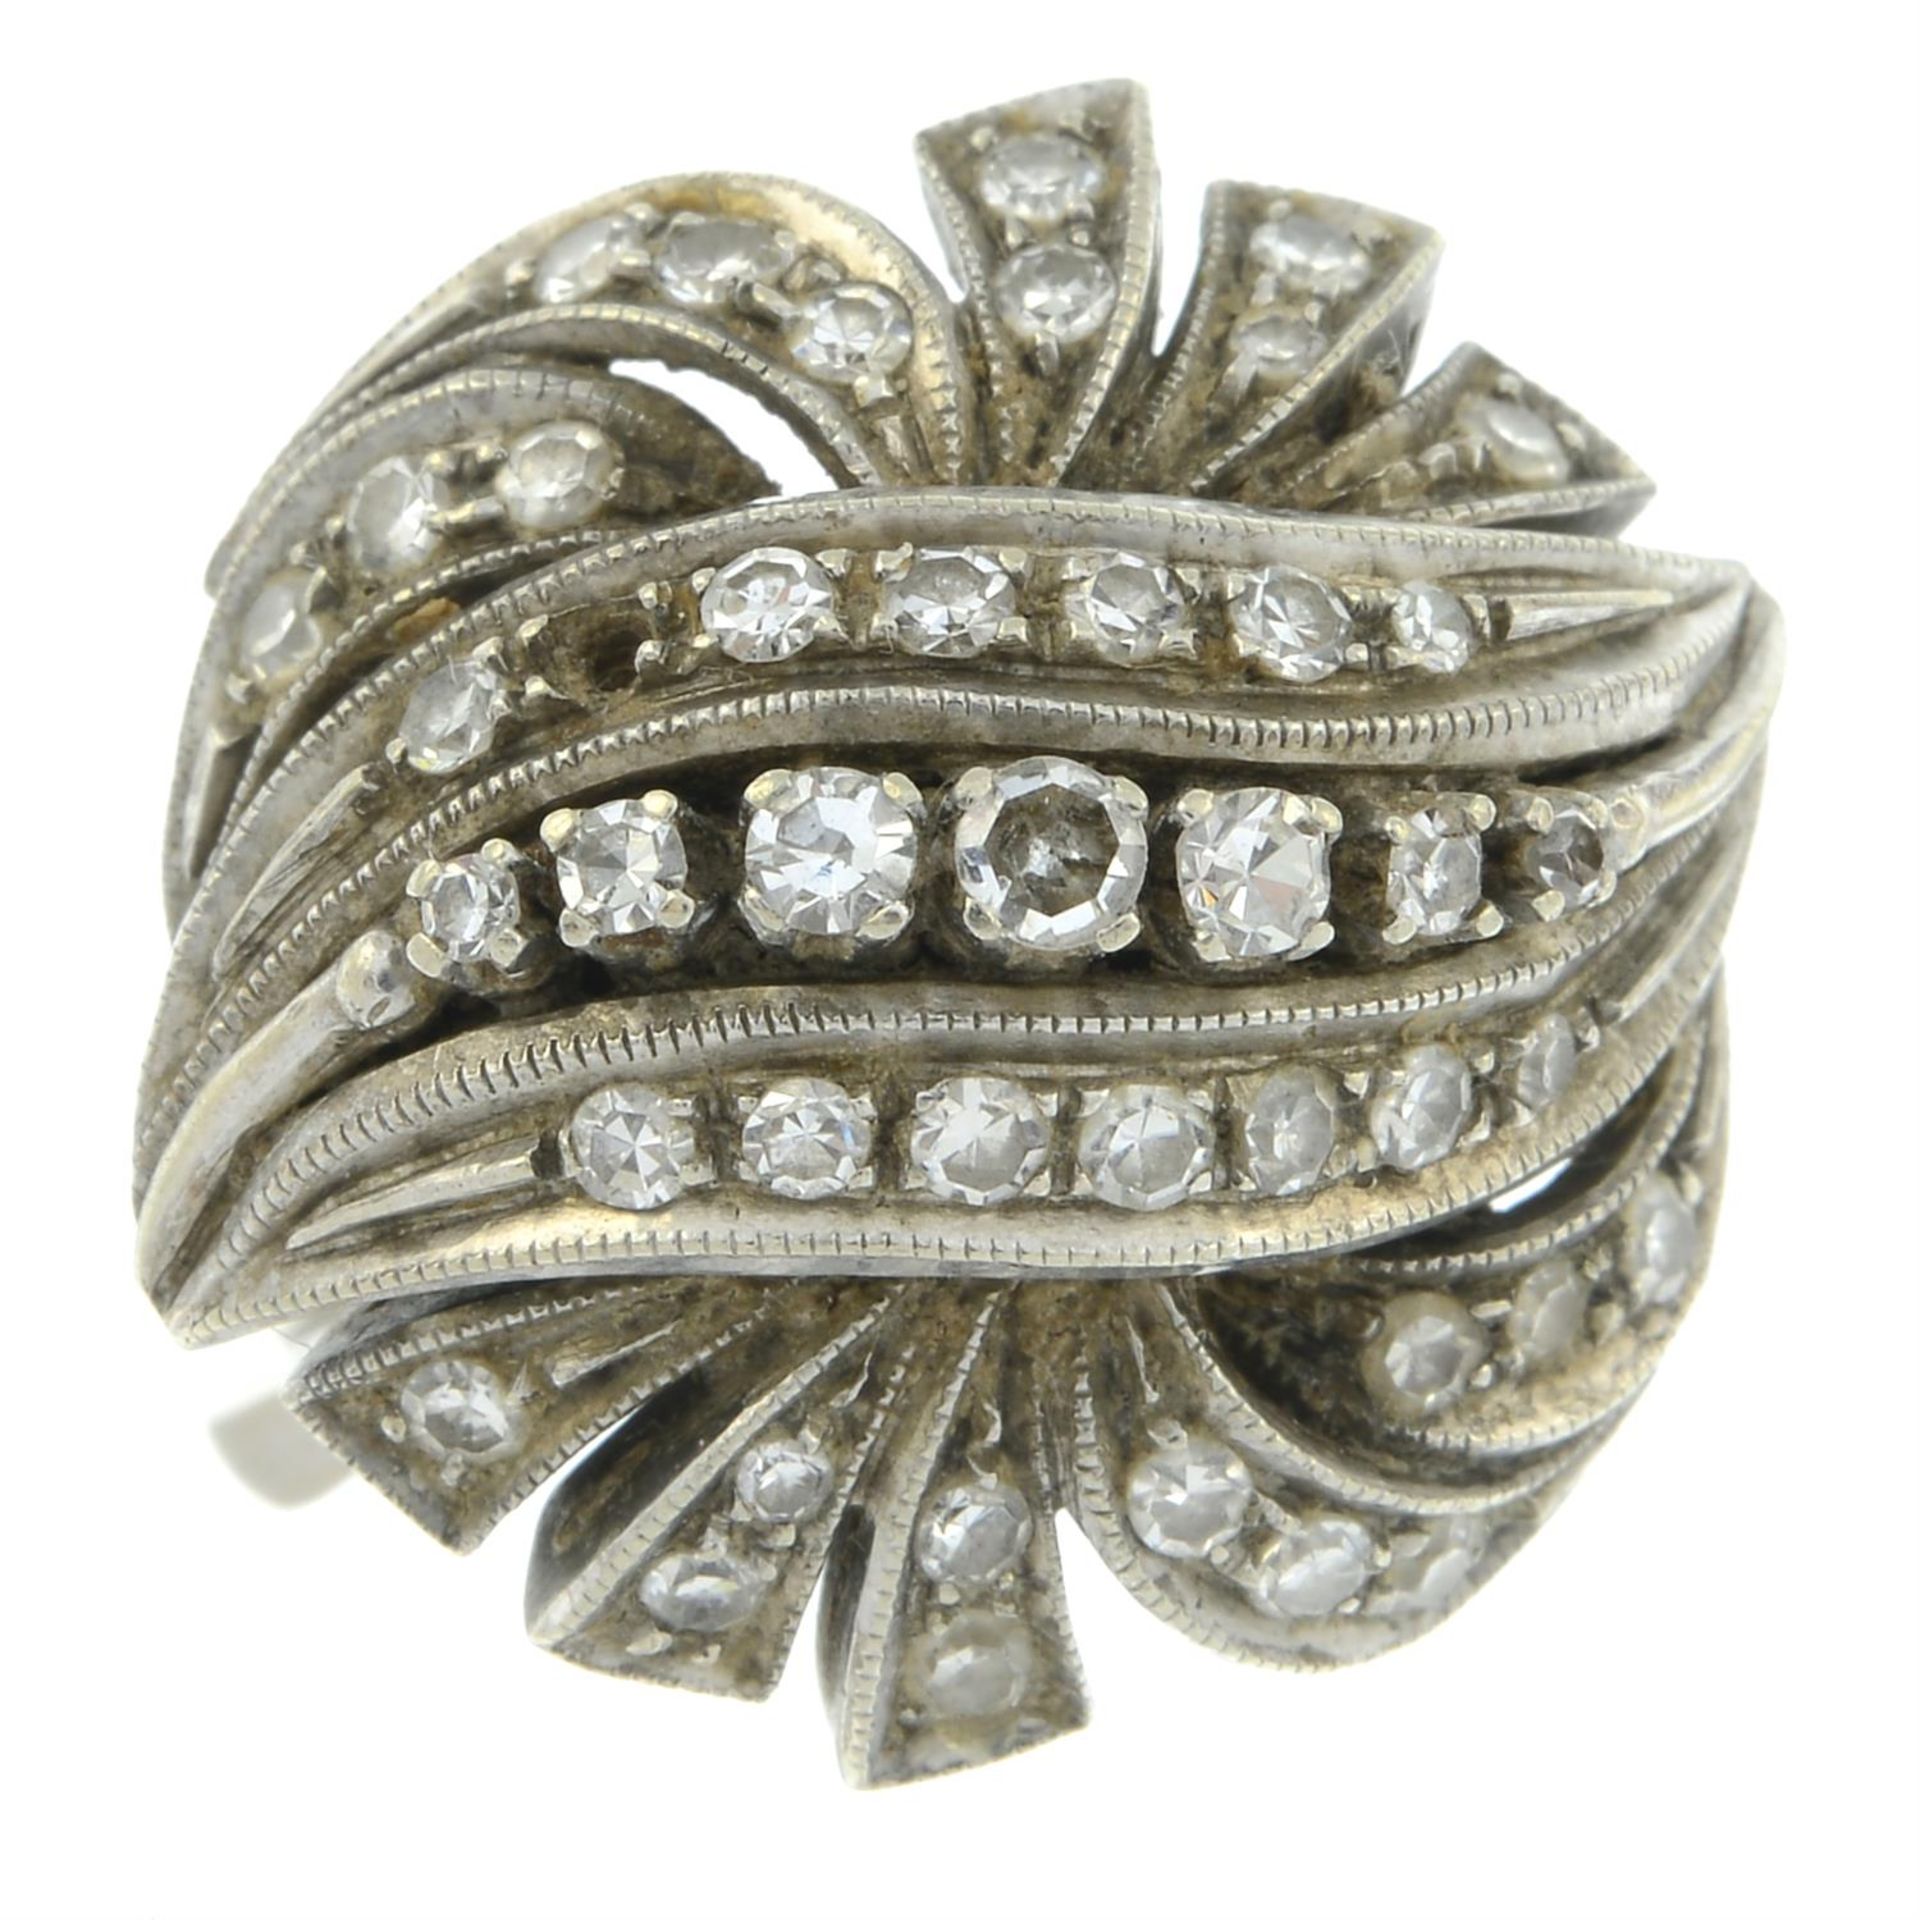 A mid 20th century platinum pave-set diamond ring.